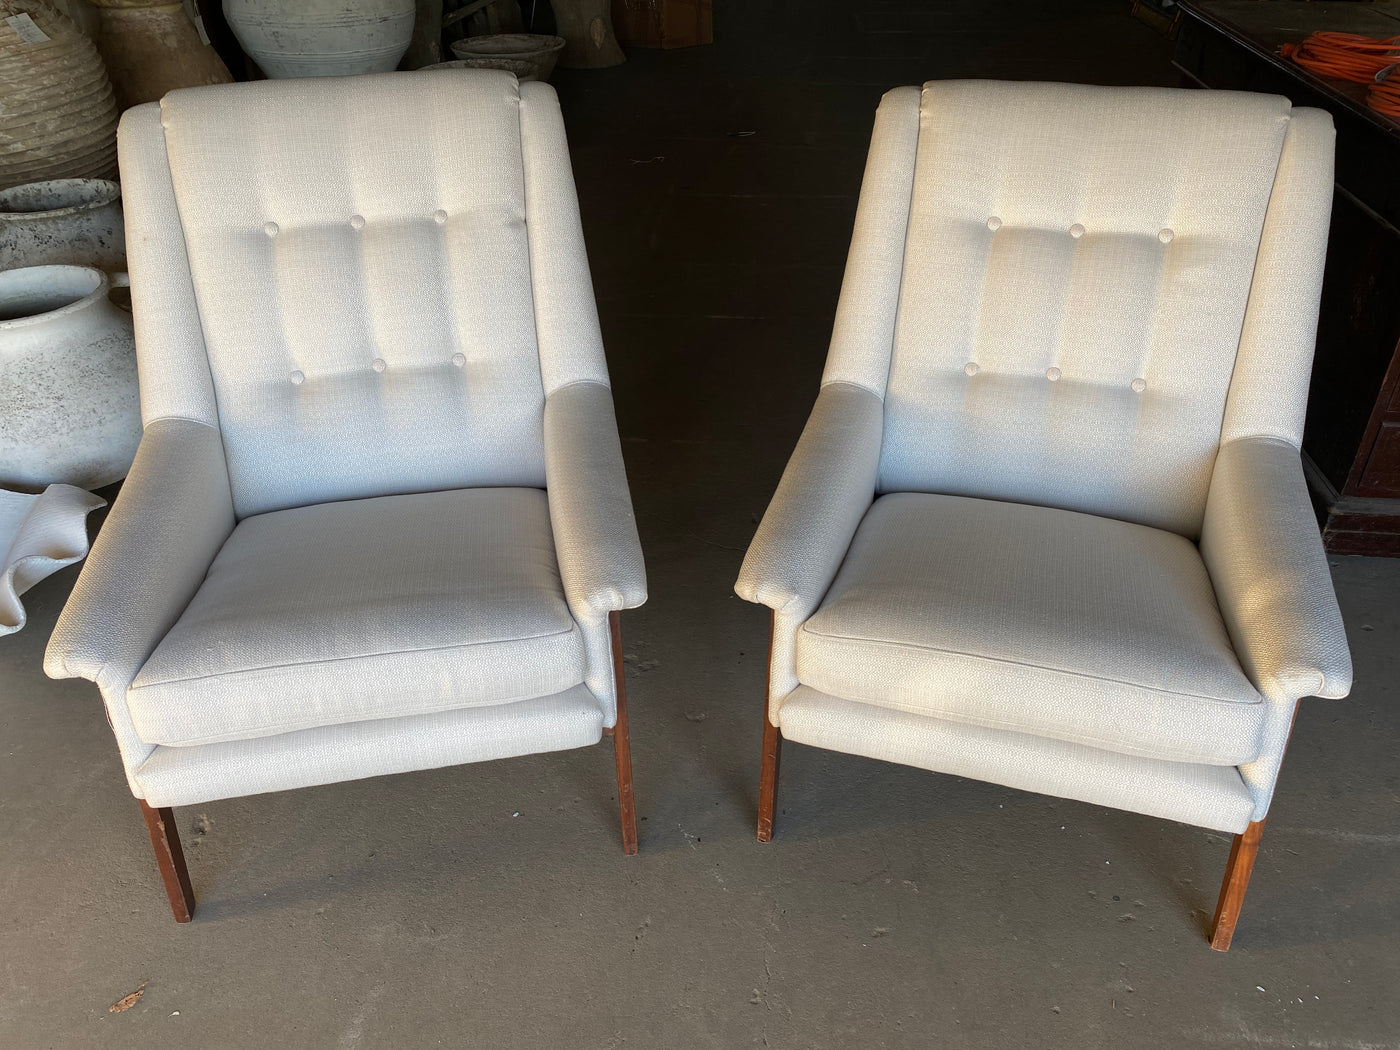 Italian Mid-Century Modern Chairs - New Upholstery